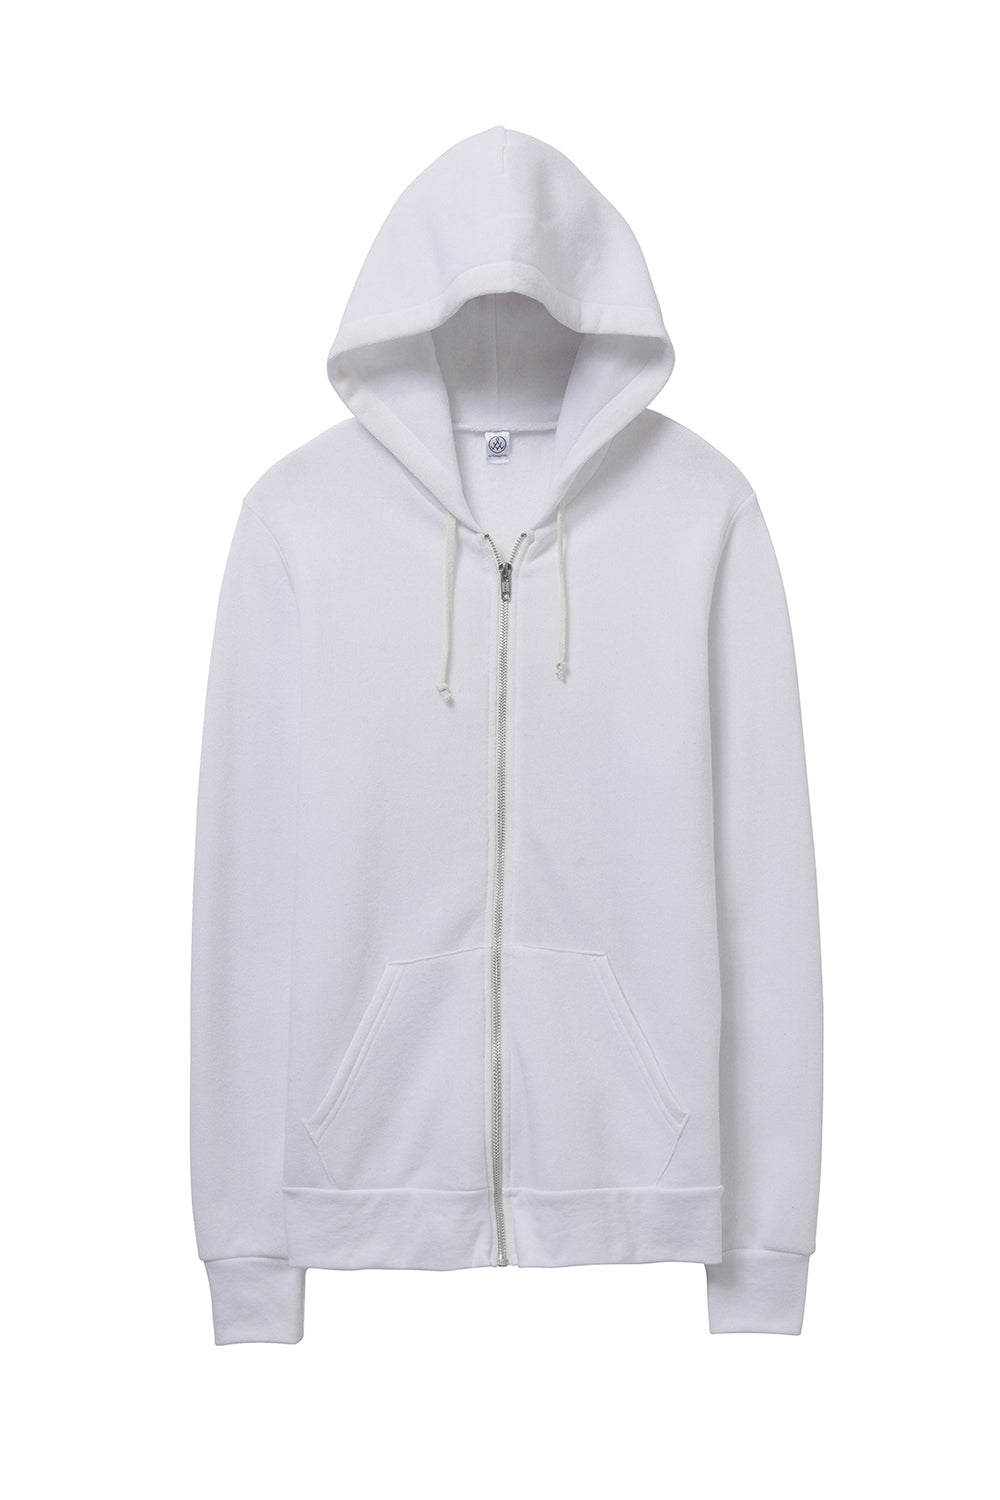 Alternative AA9590/9590 Mens Rocky Eco Fleece Full Zip Hooded Sweatshirt Hoodie Eco White Flat Front